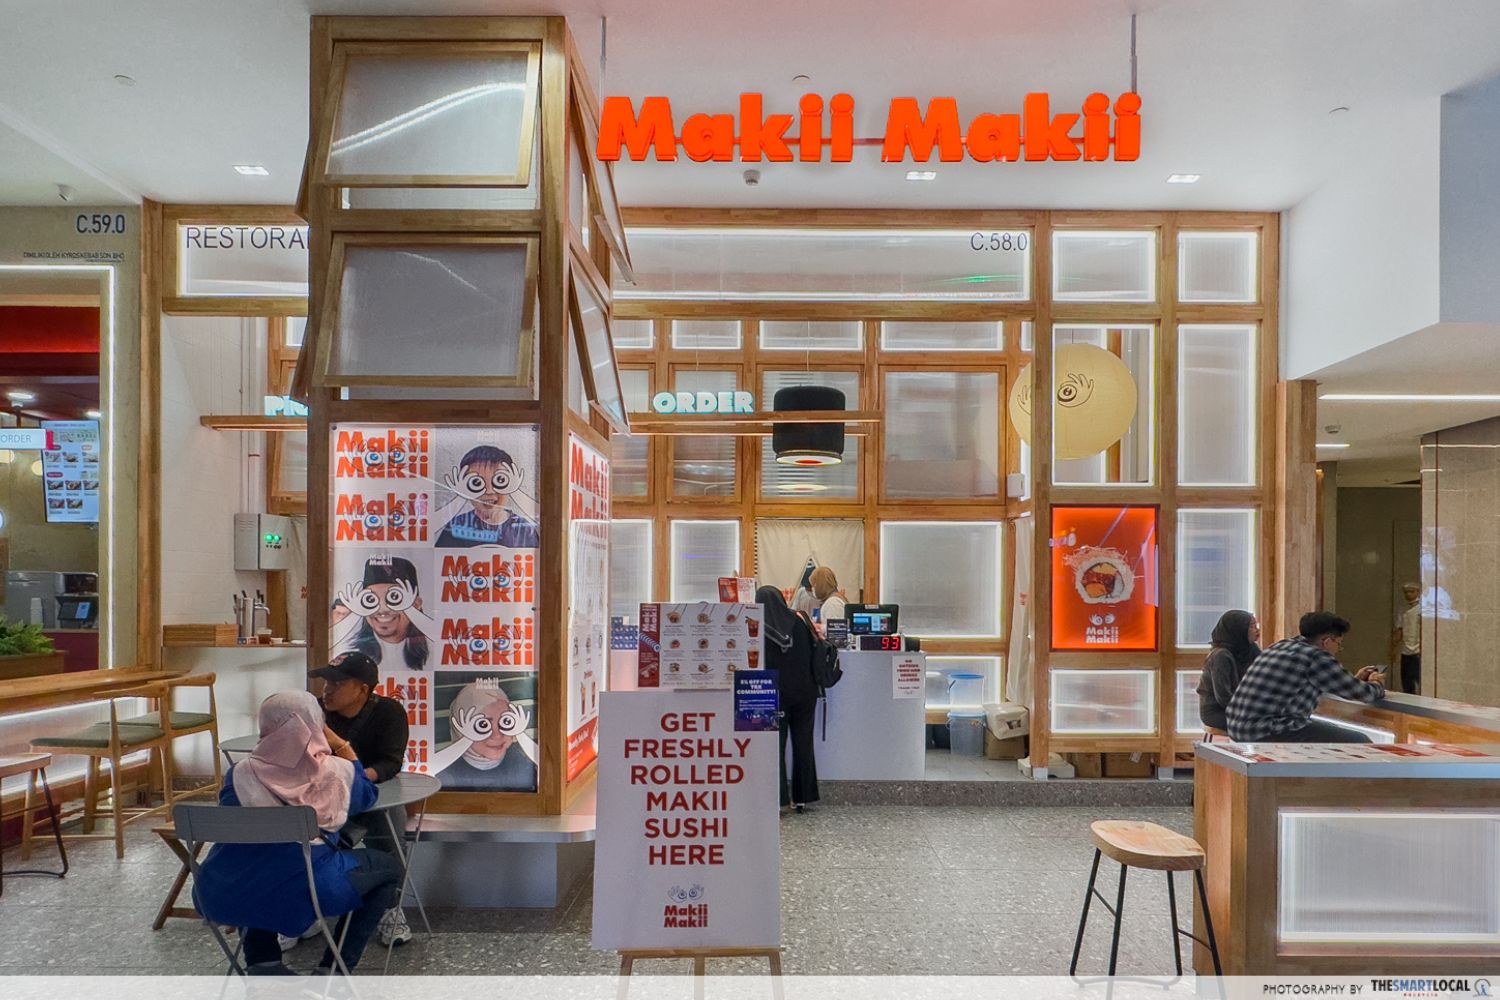 makii makii shopfront, with a neon orange signage